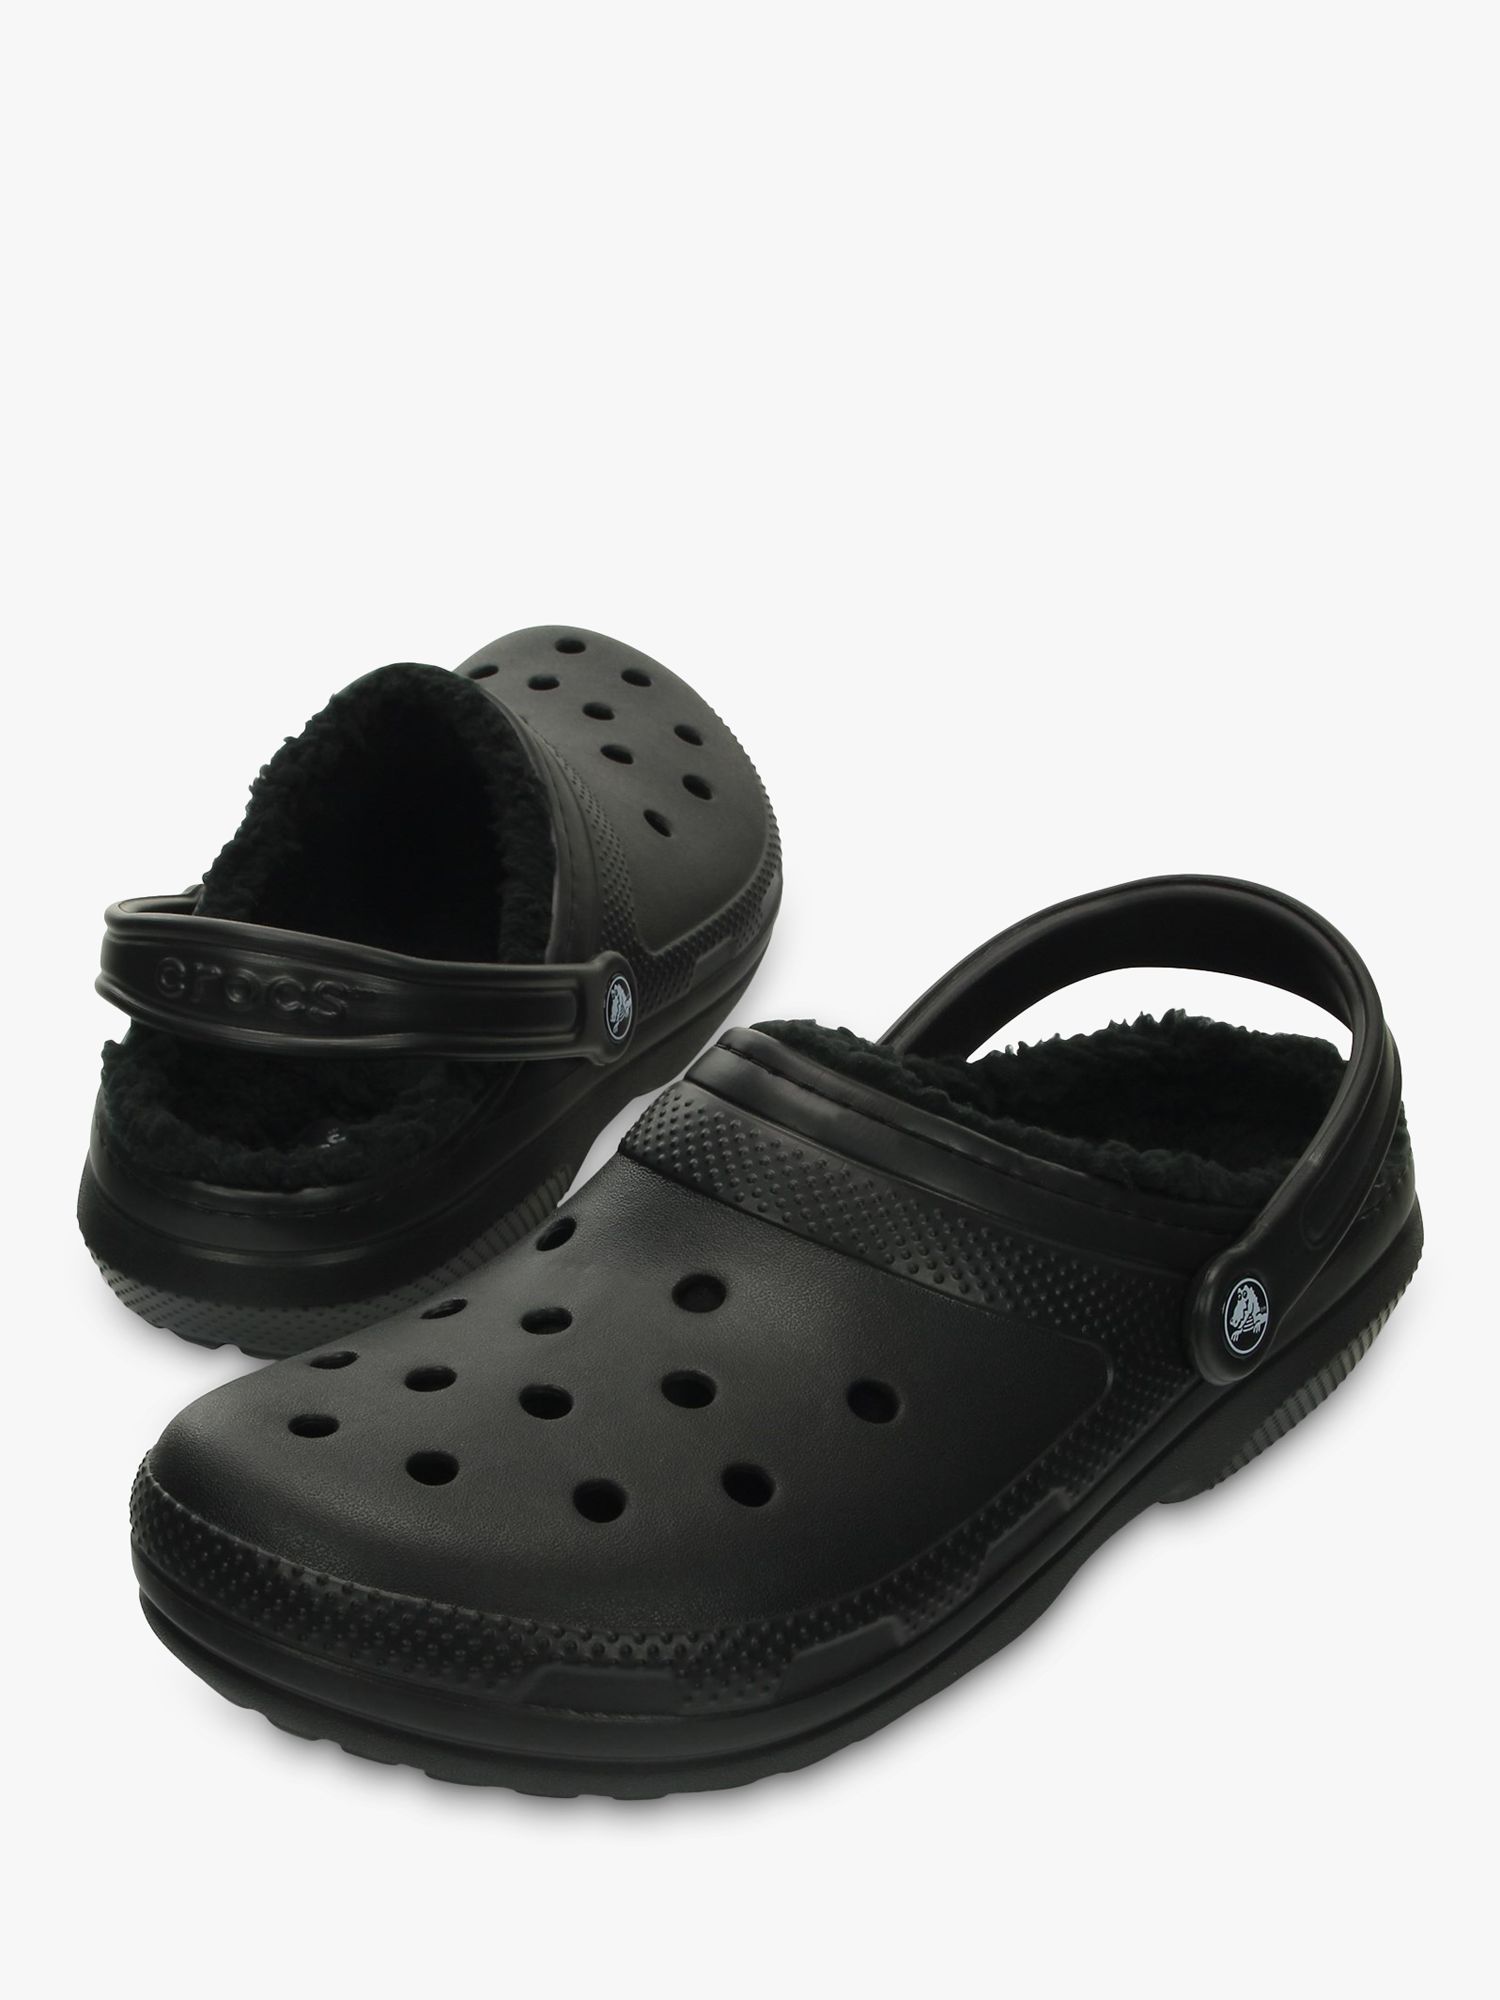 Crocs Classic Lined Clogs, Black, 4